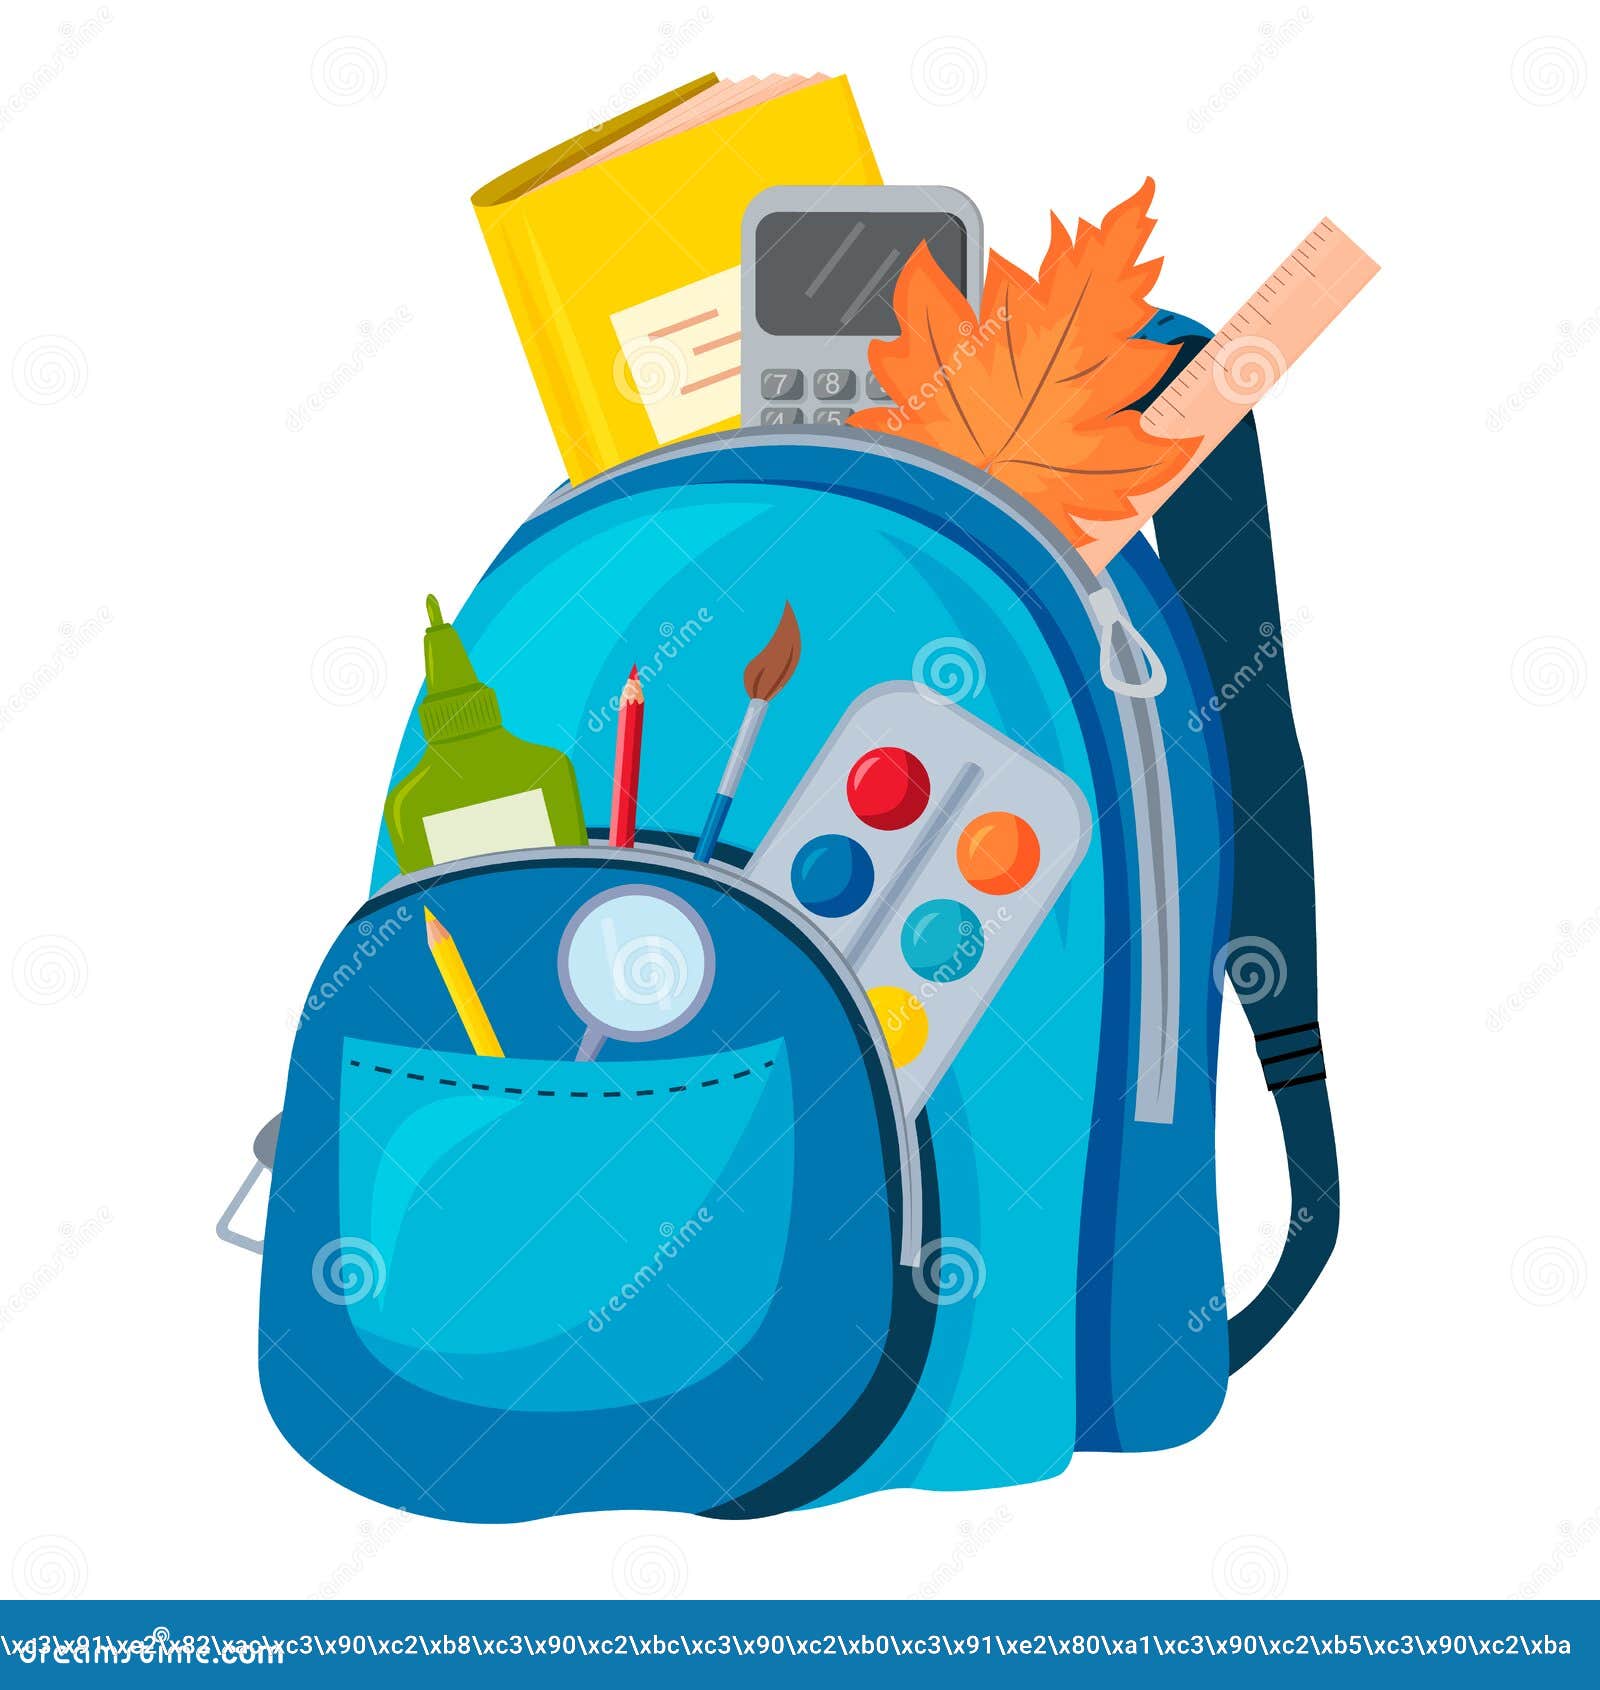 https://thumbs.dreamstime.com/z/image-blue-backpack-school-supplies-concept-education-vector-222554883.jpg